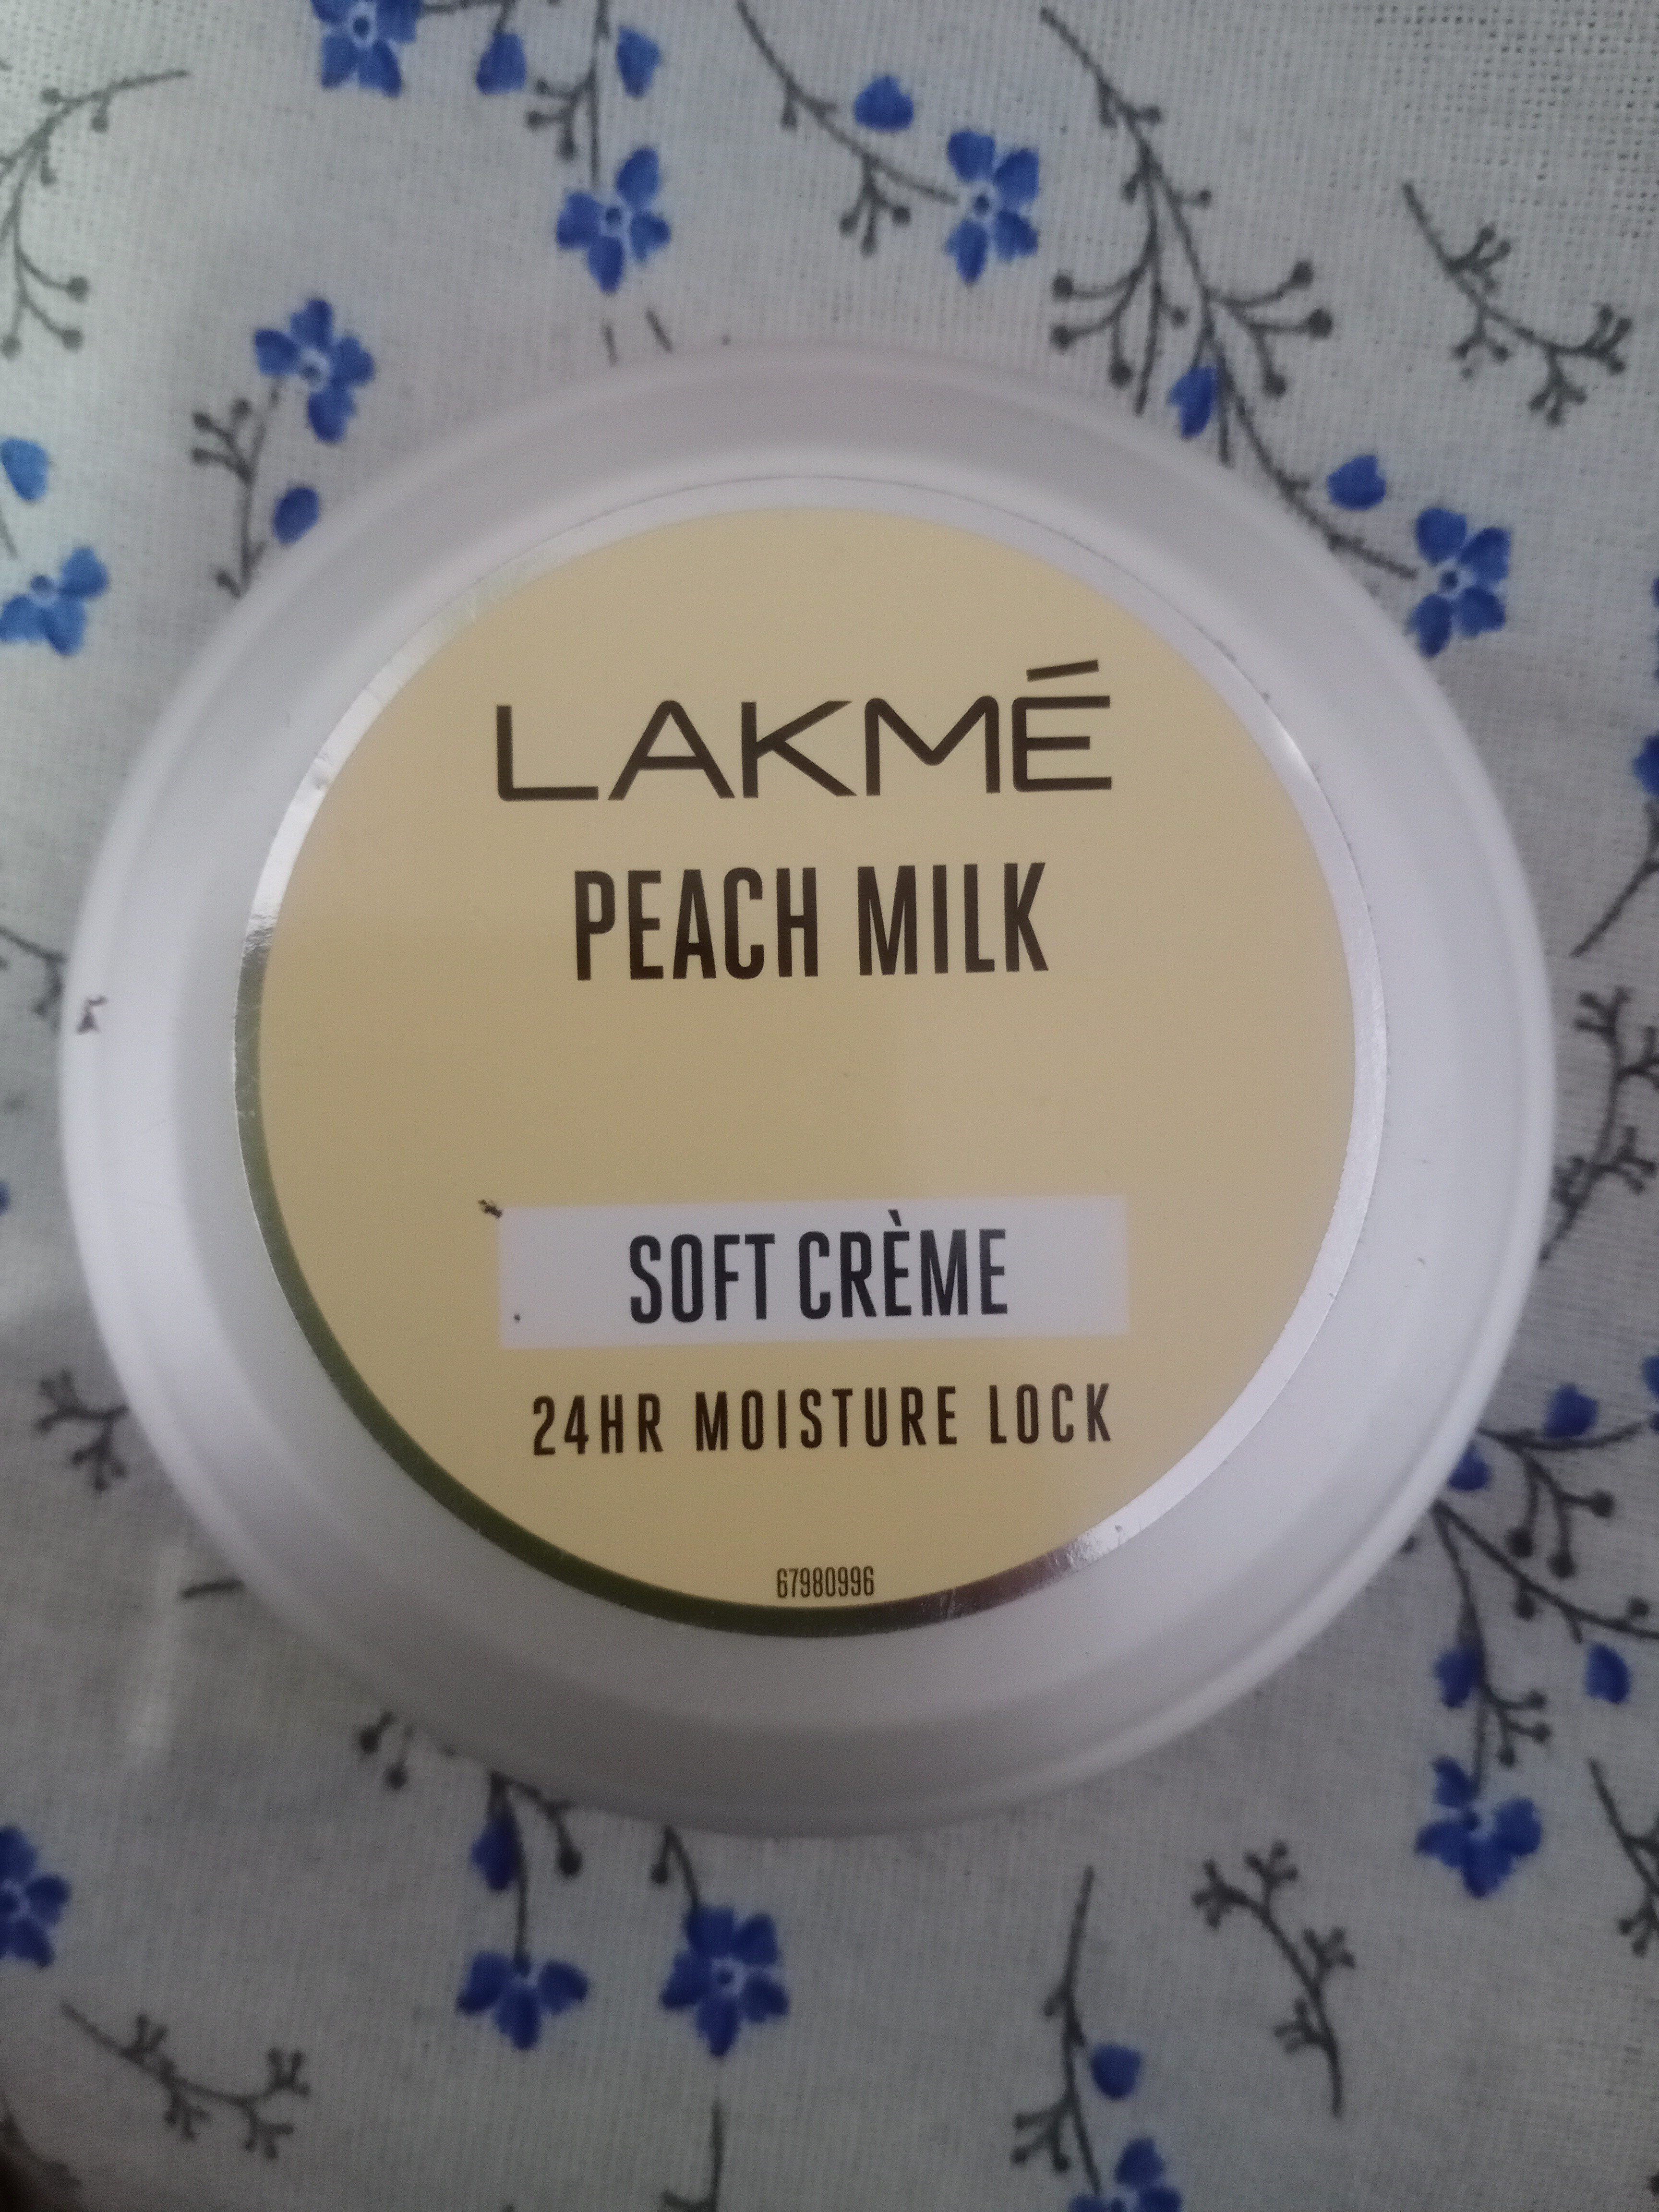 lakme peach milk soft creme - Produto - en